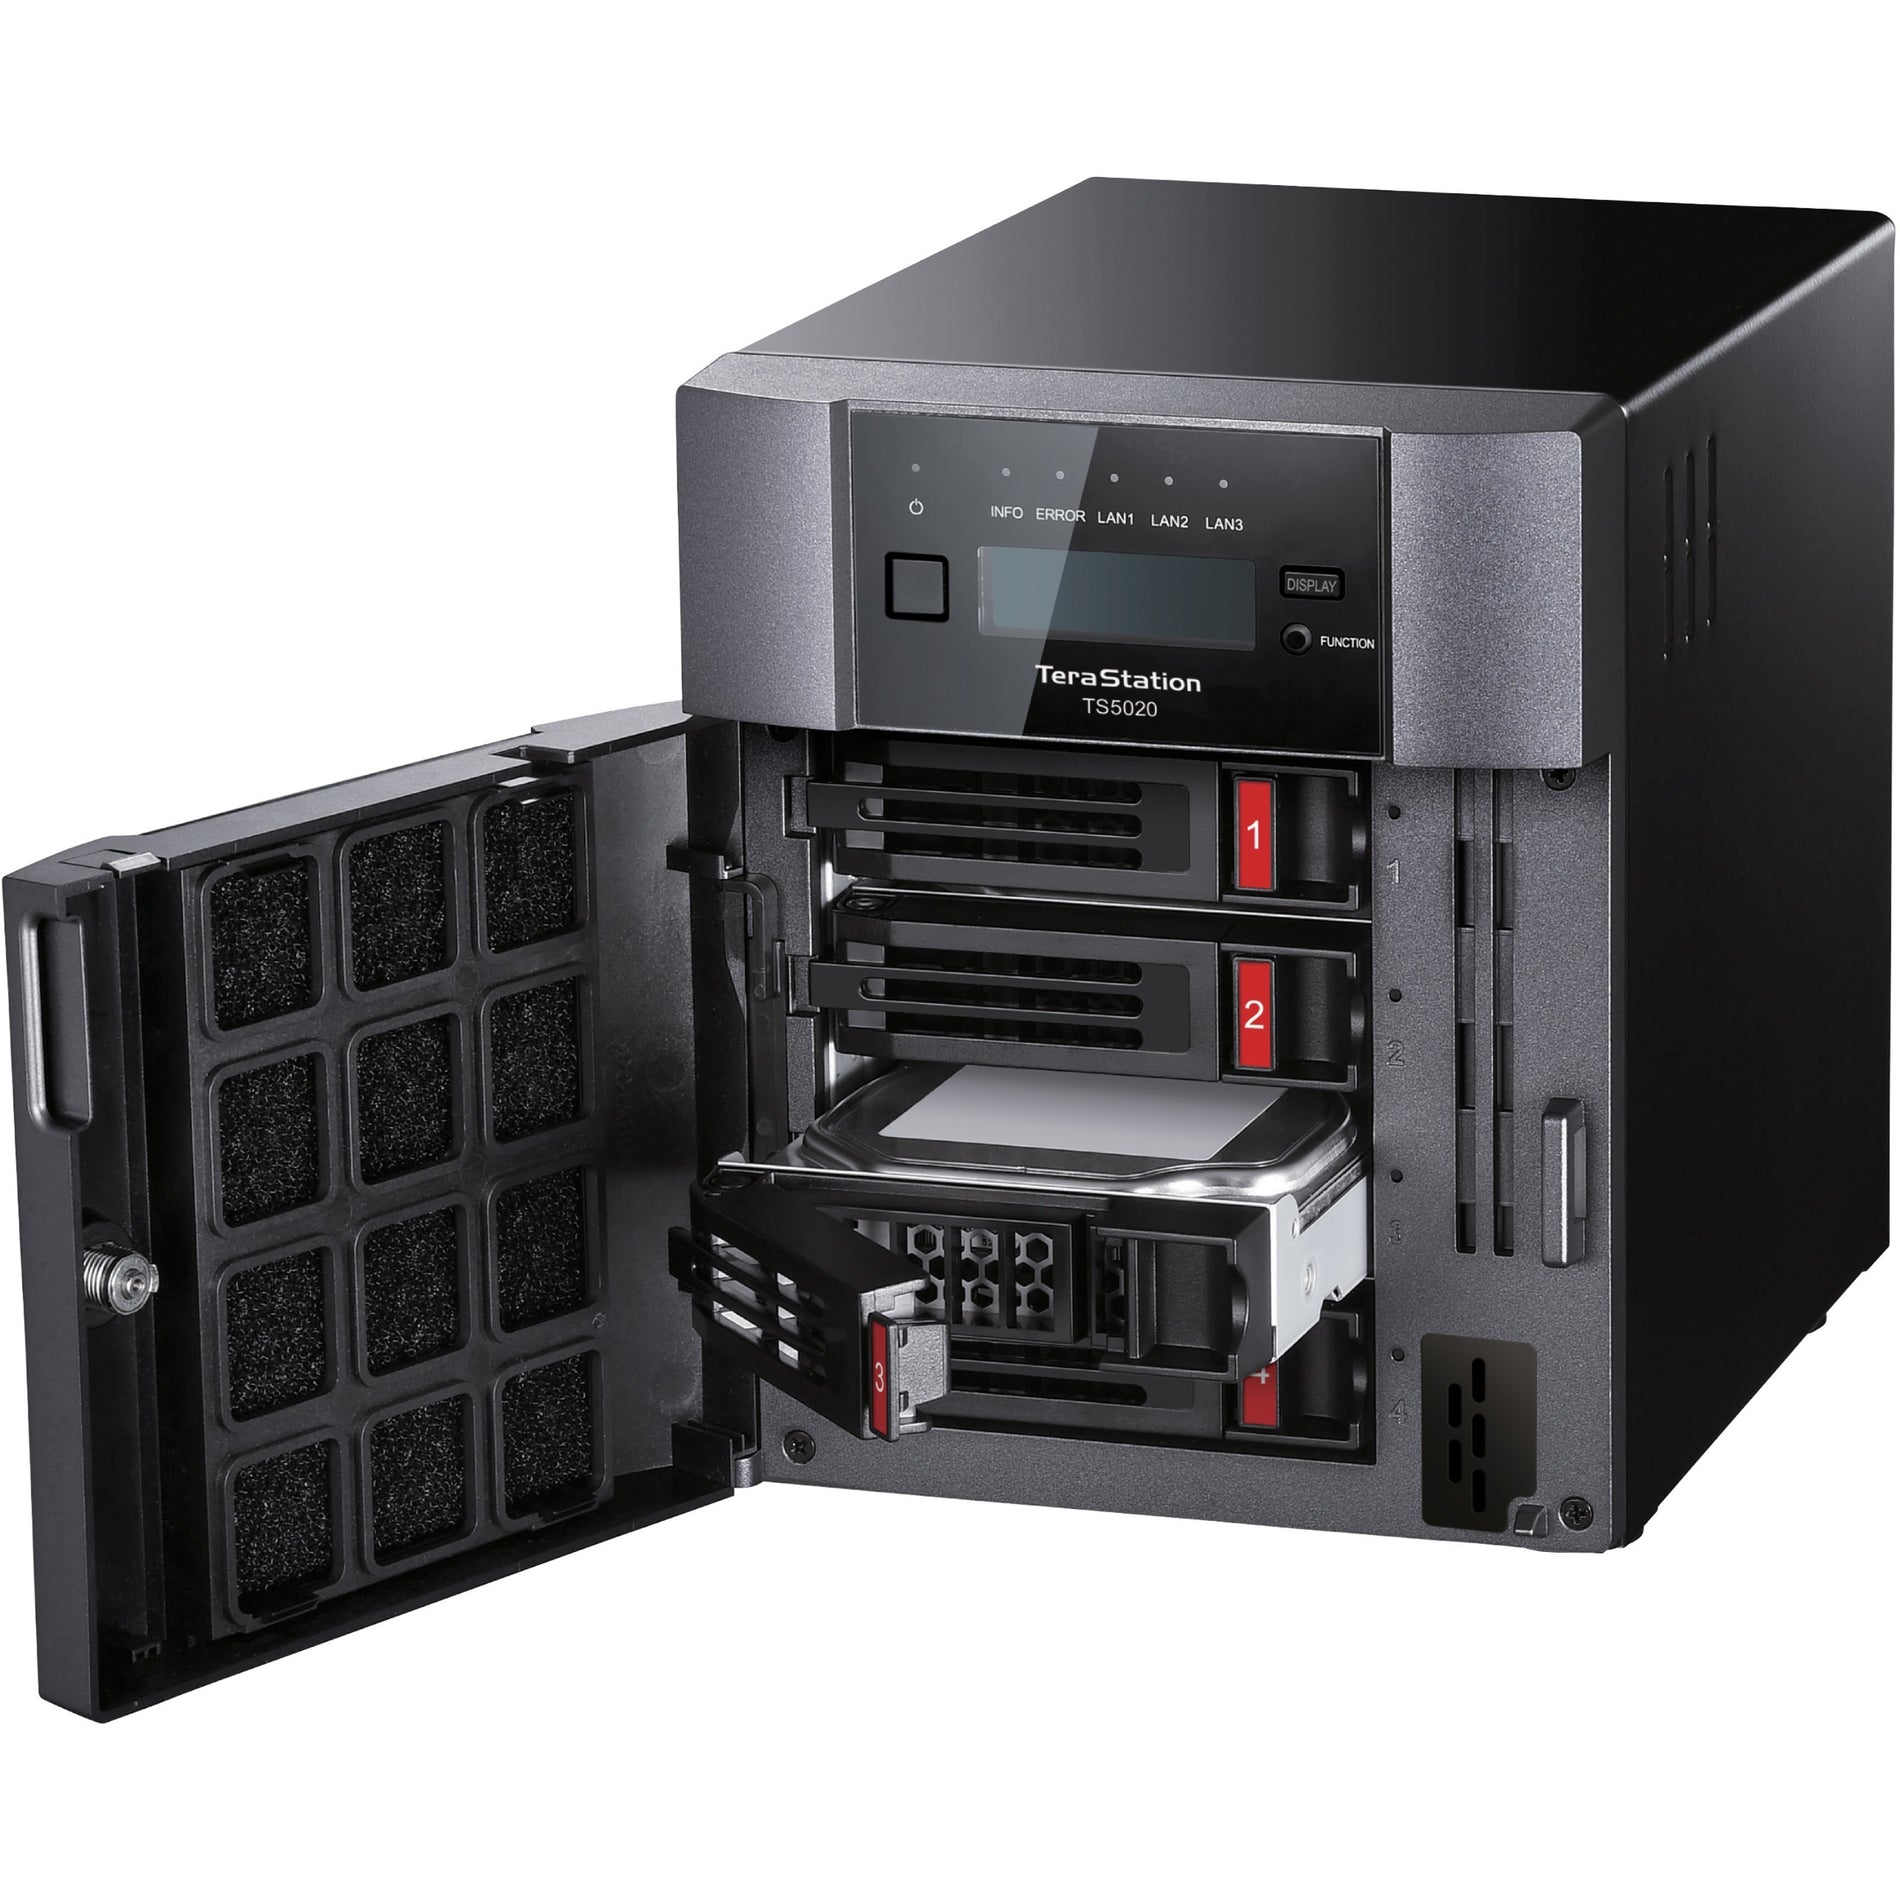 Buffalo TS5420DN8004 TeraStation TS5420DN SAN/NAS Storage System, 80TB Capacity, 10GbE Ethernet